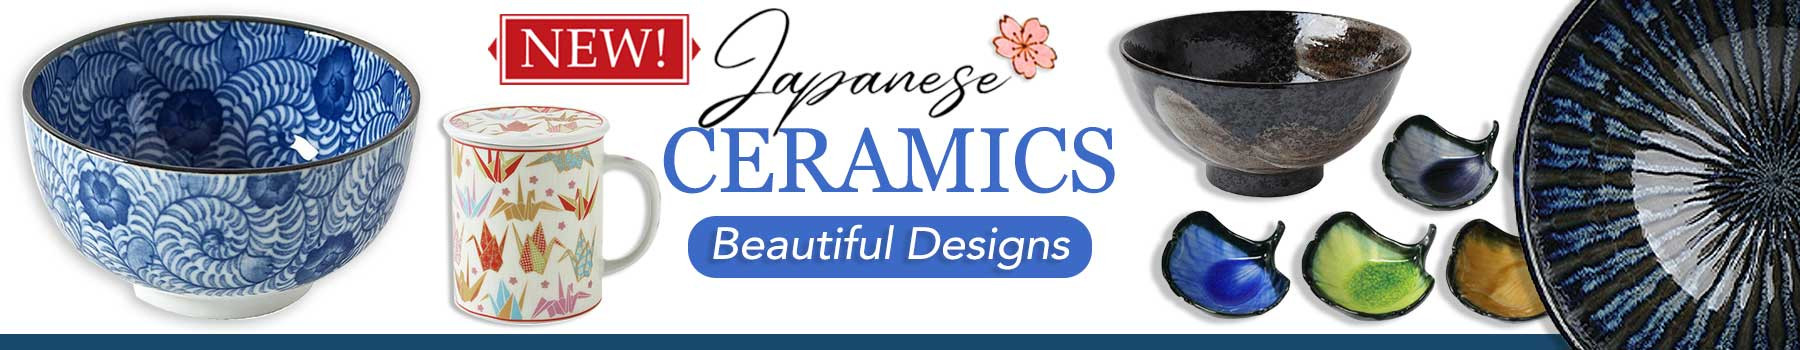 New Japanese Ceramics - Wholesale